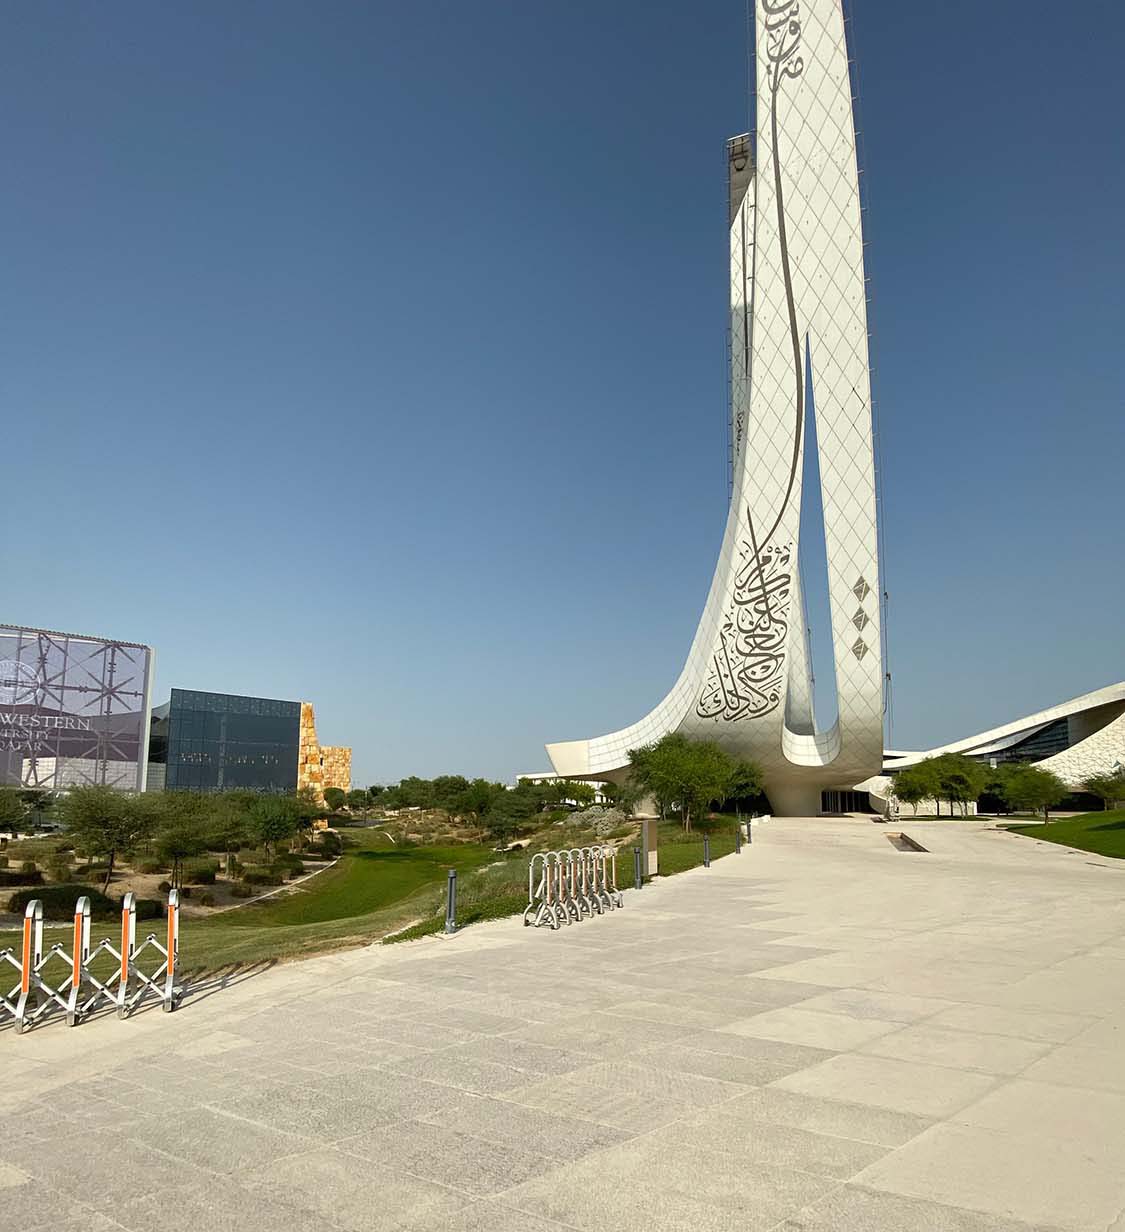 Hamad Bin Khalifa University College of Islamic Studies (QFIS) - View of Education City Mosque minaret; Northwestern University in Qatar visible on far left